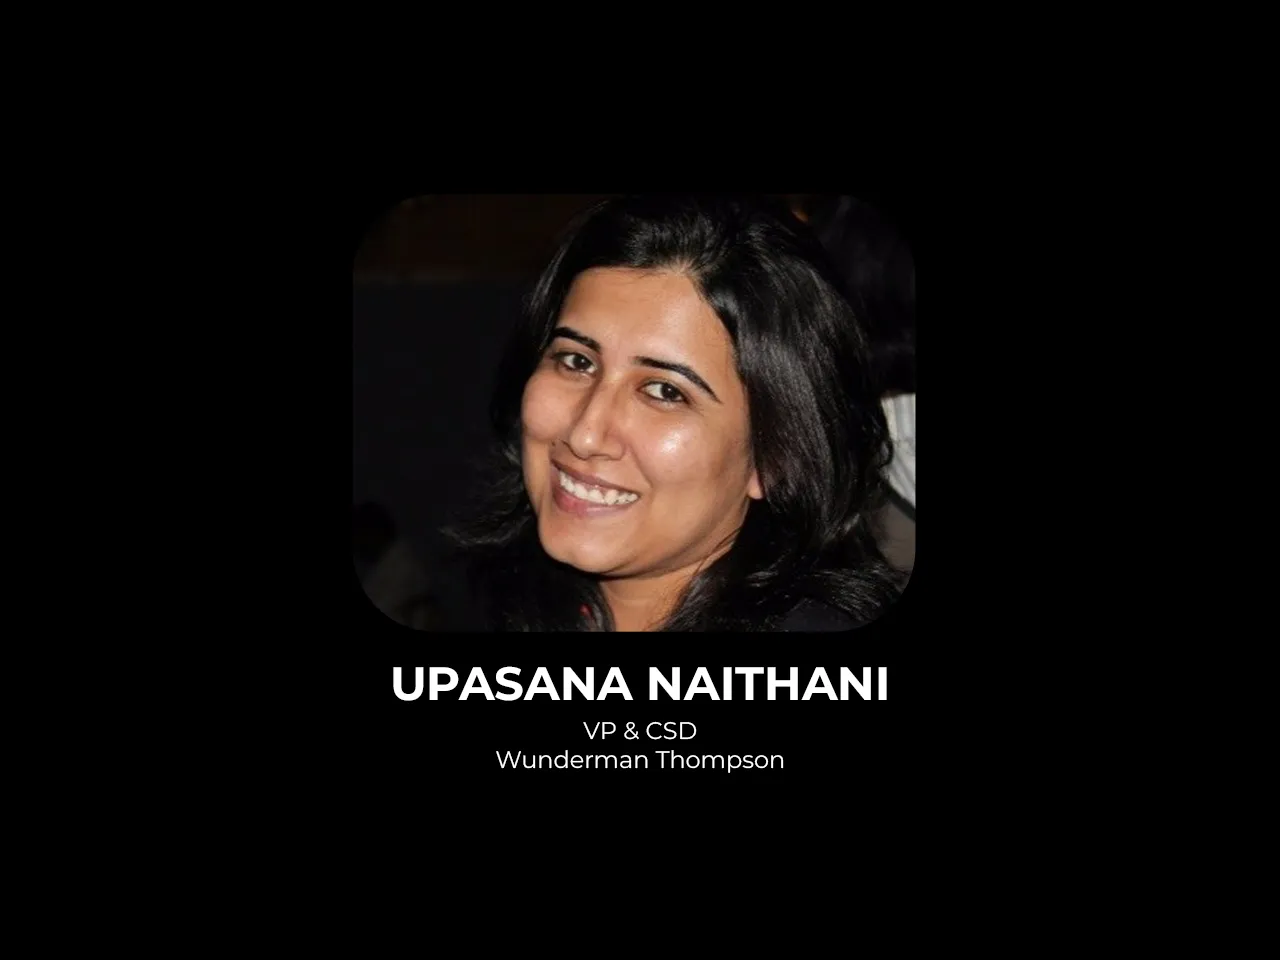 Upasana Naithani joins Wunderman Thompson as VP & CSD